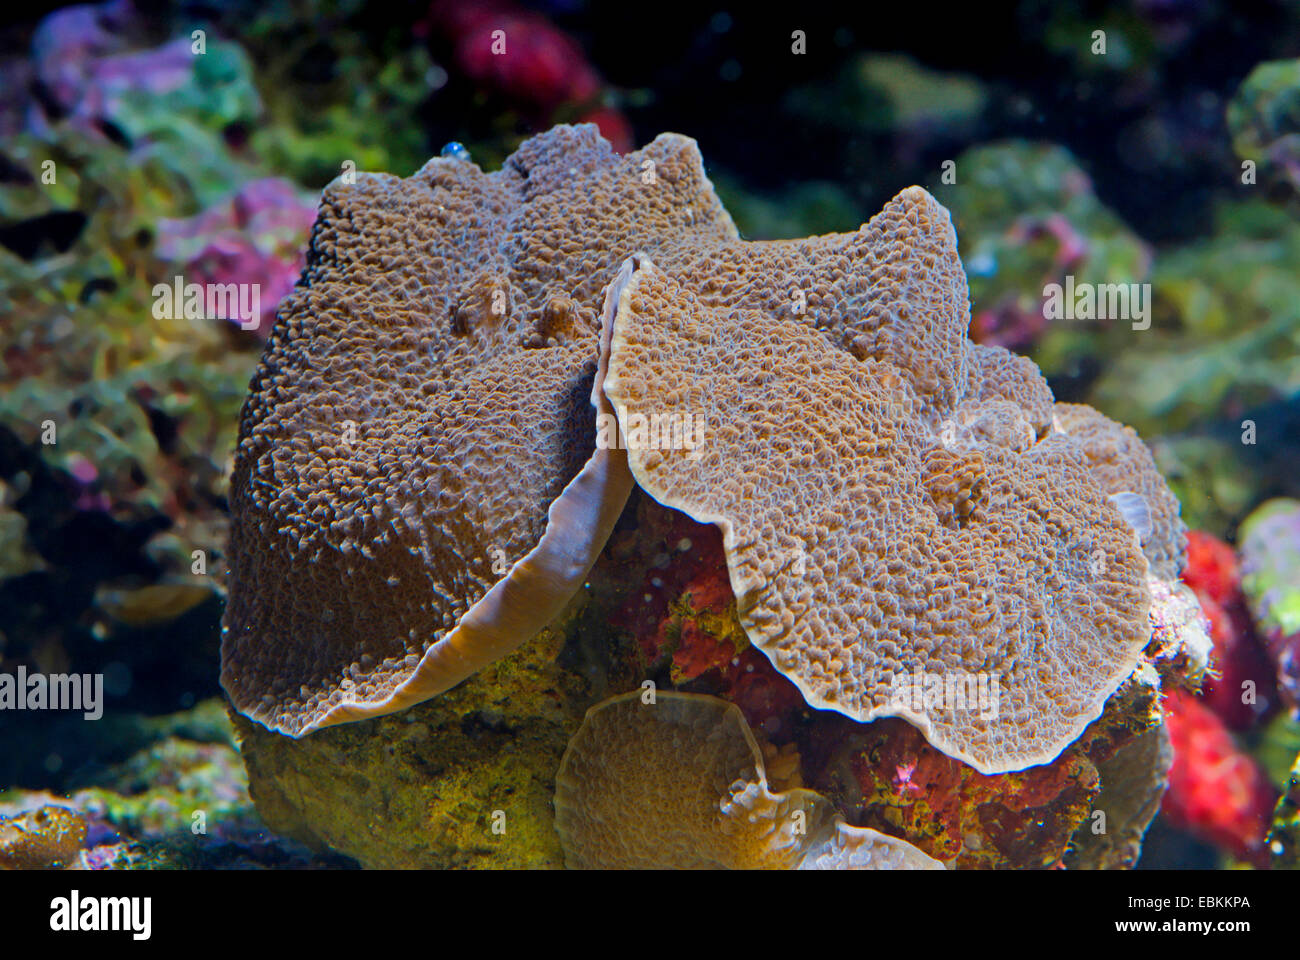 Mushroom Anemone (Rhodactis spec.), side view Stock Photo